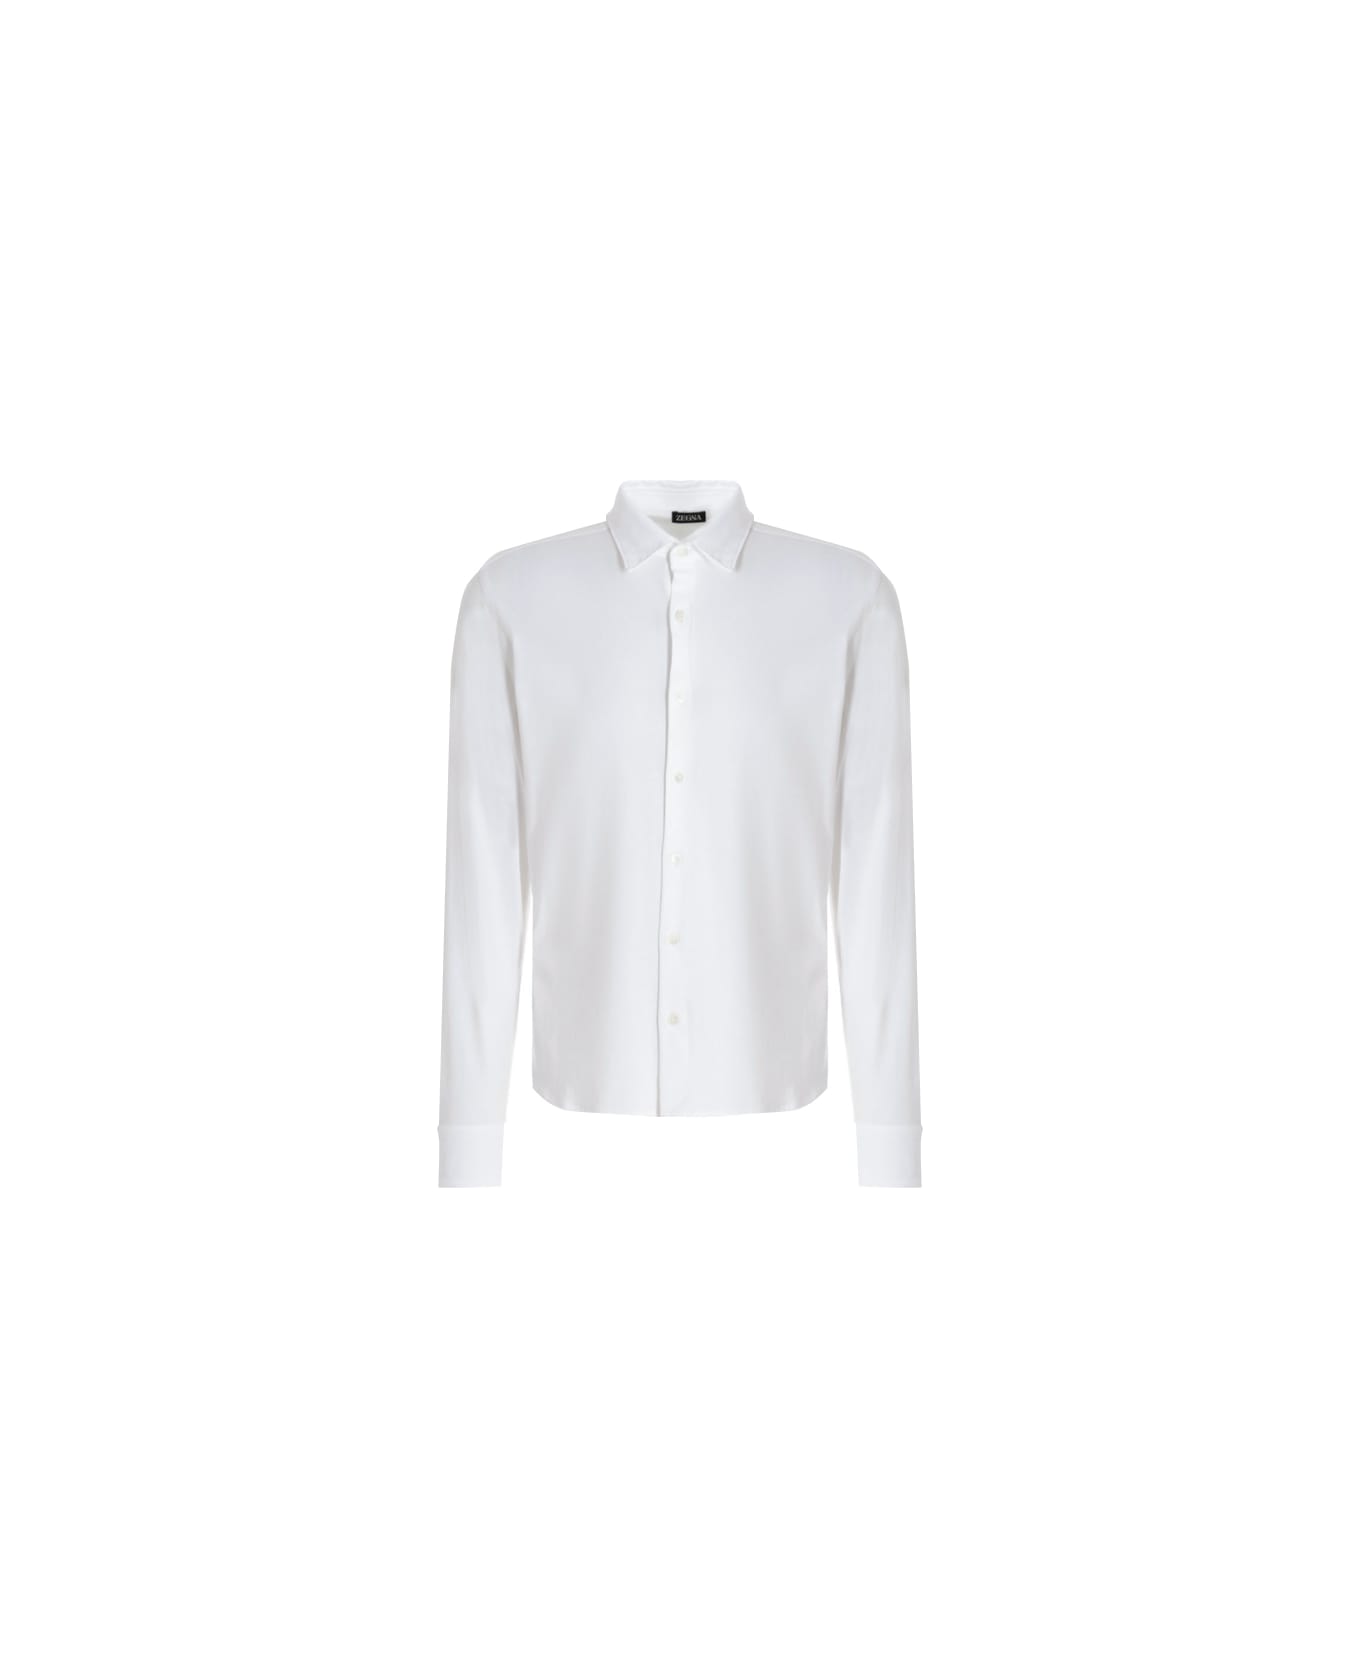 Zegna Cotton Jersey Shirt - White シャツ